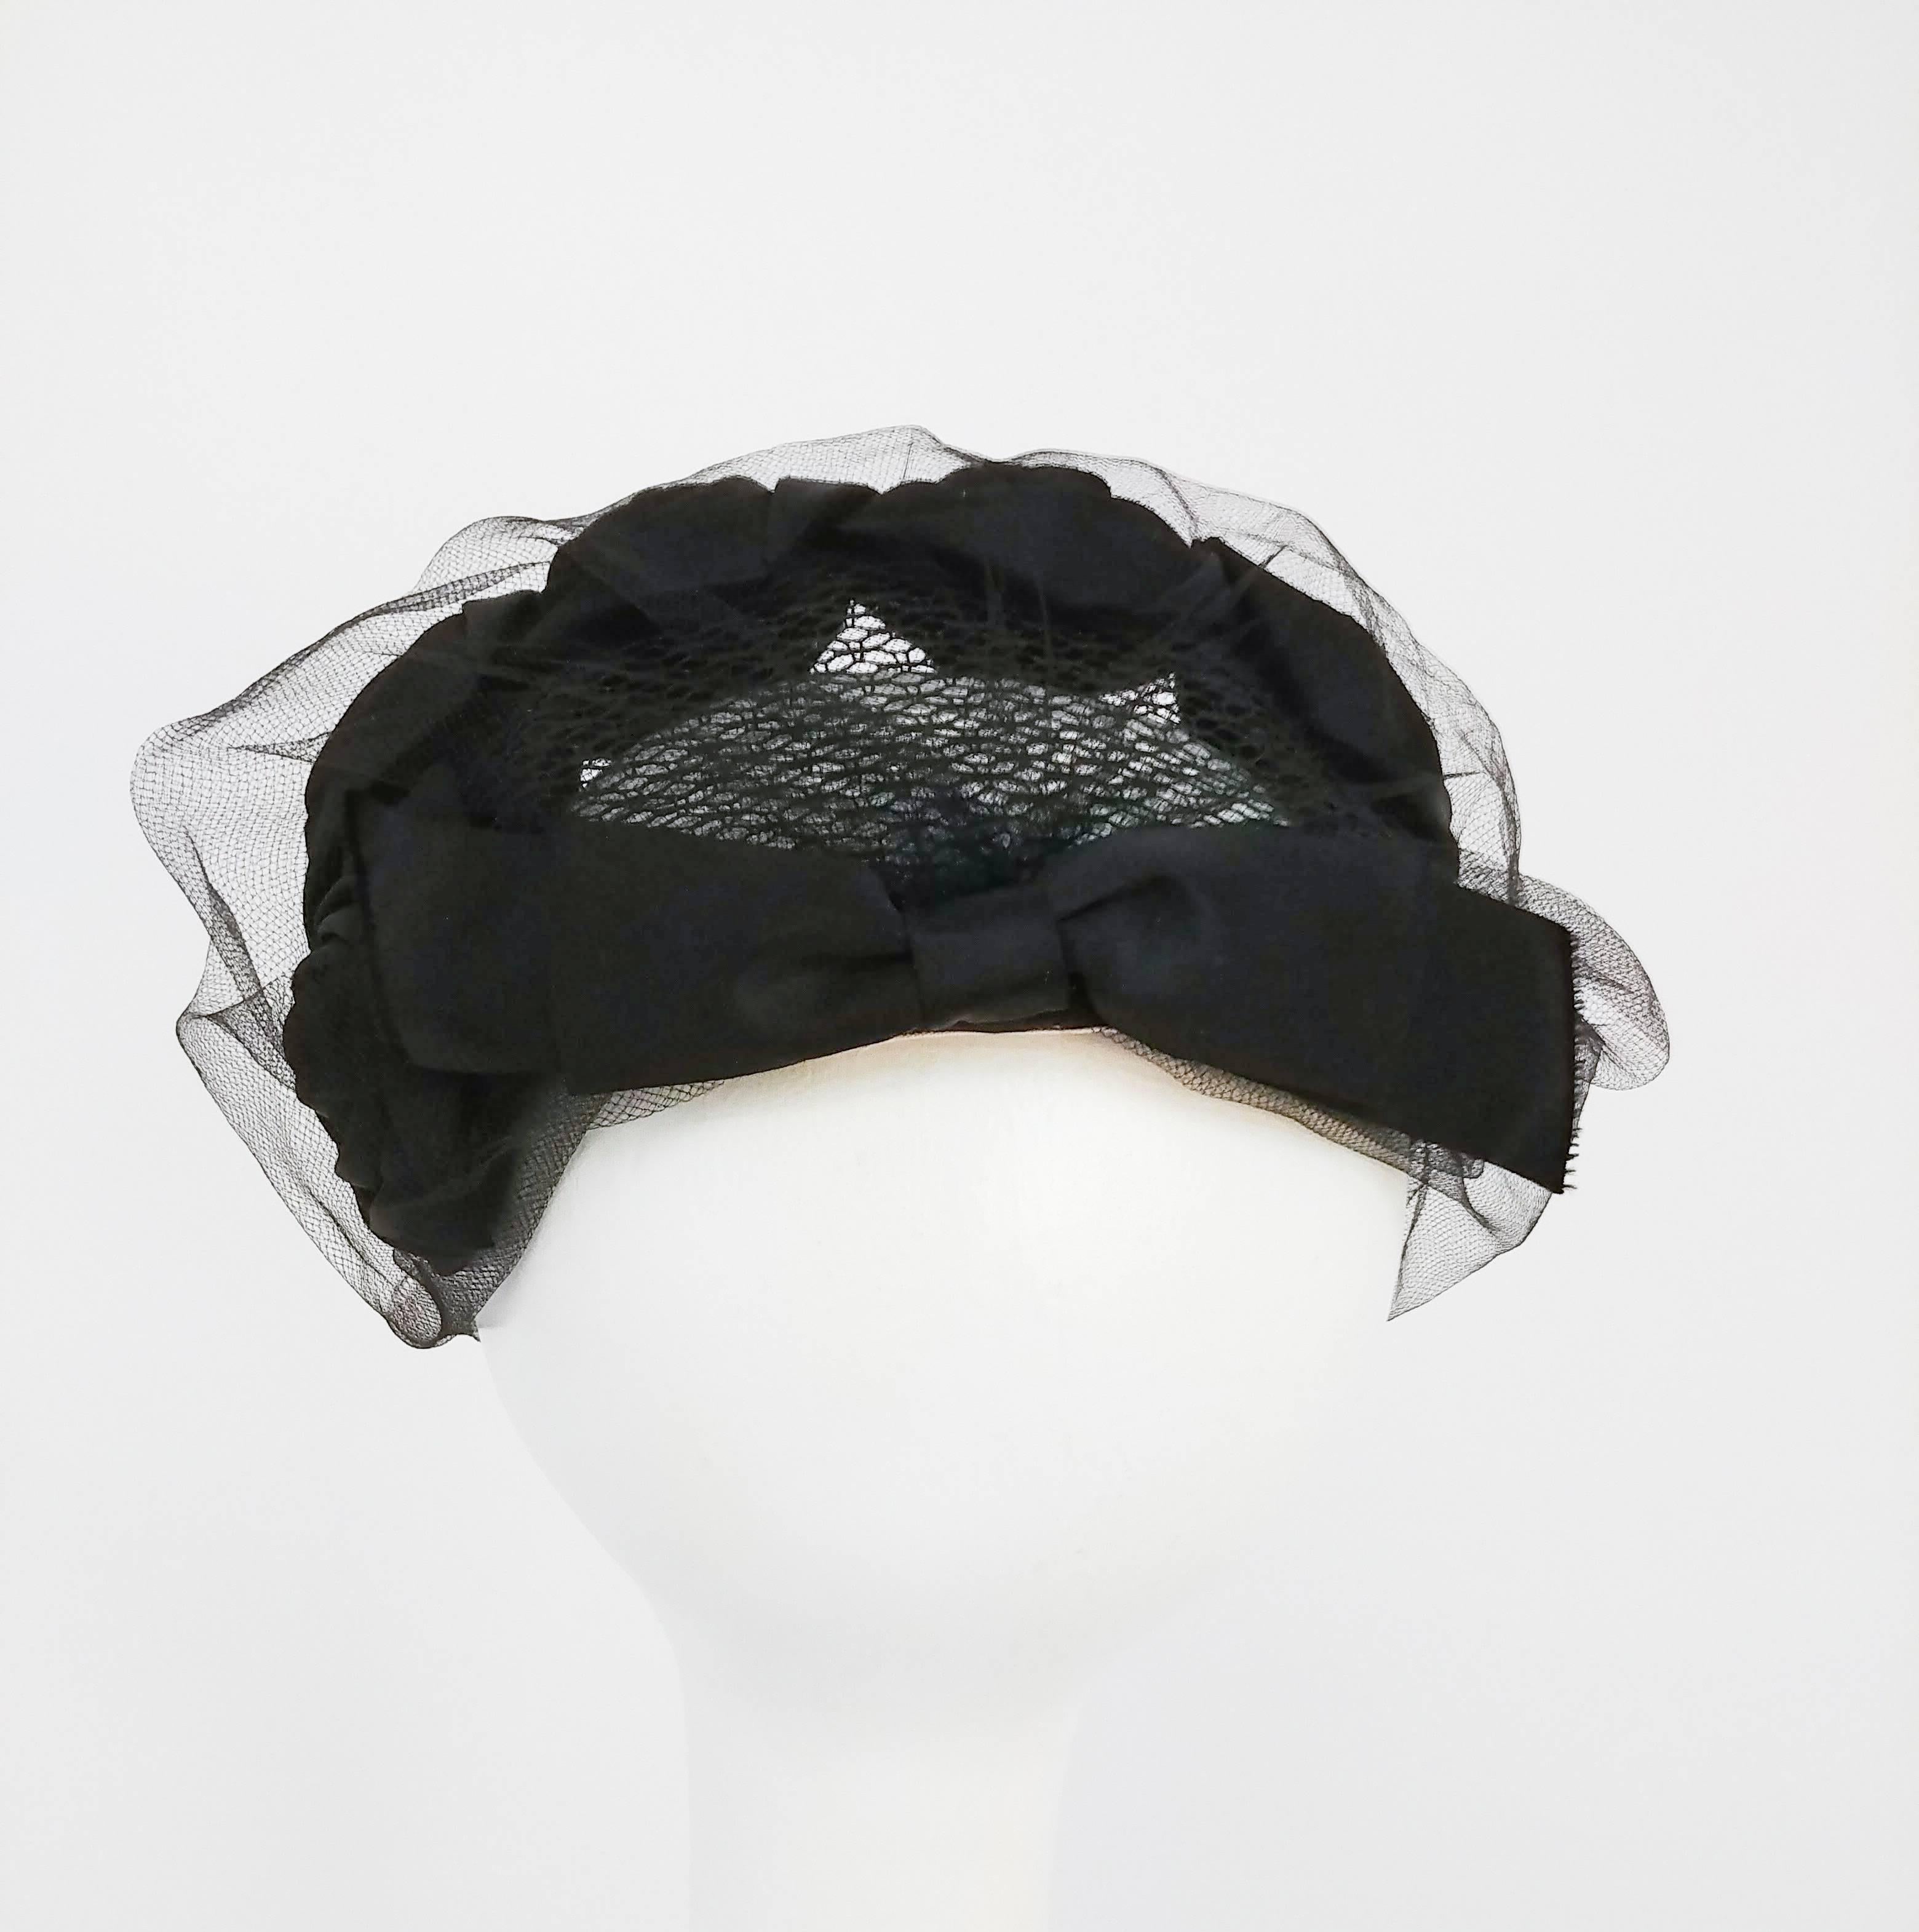 Women's 1950s Black Rose Cocktail Hat w/ Veil